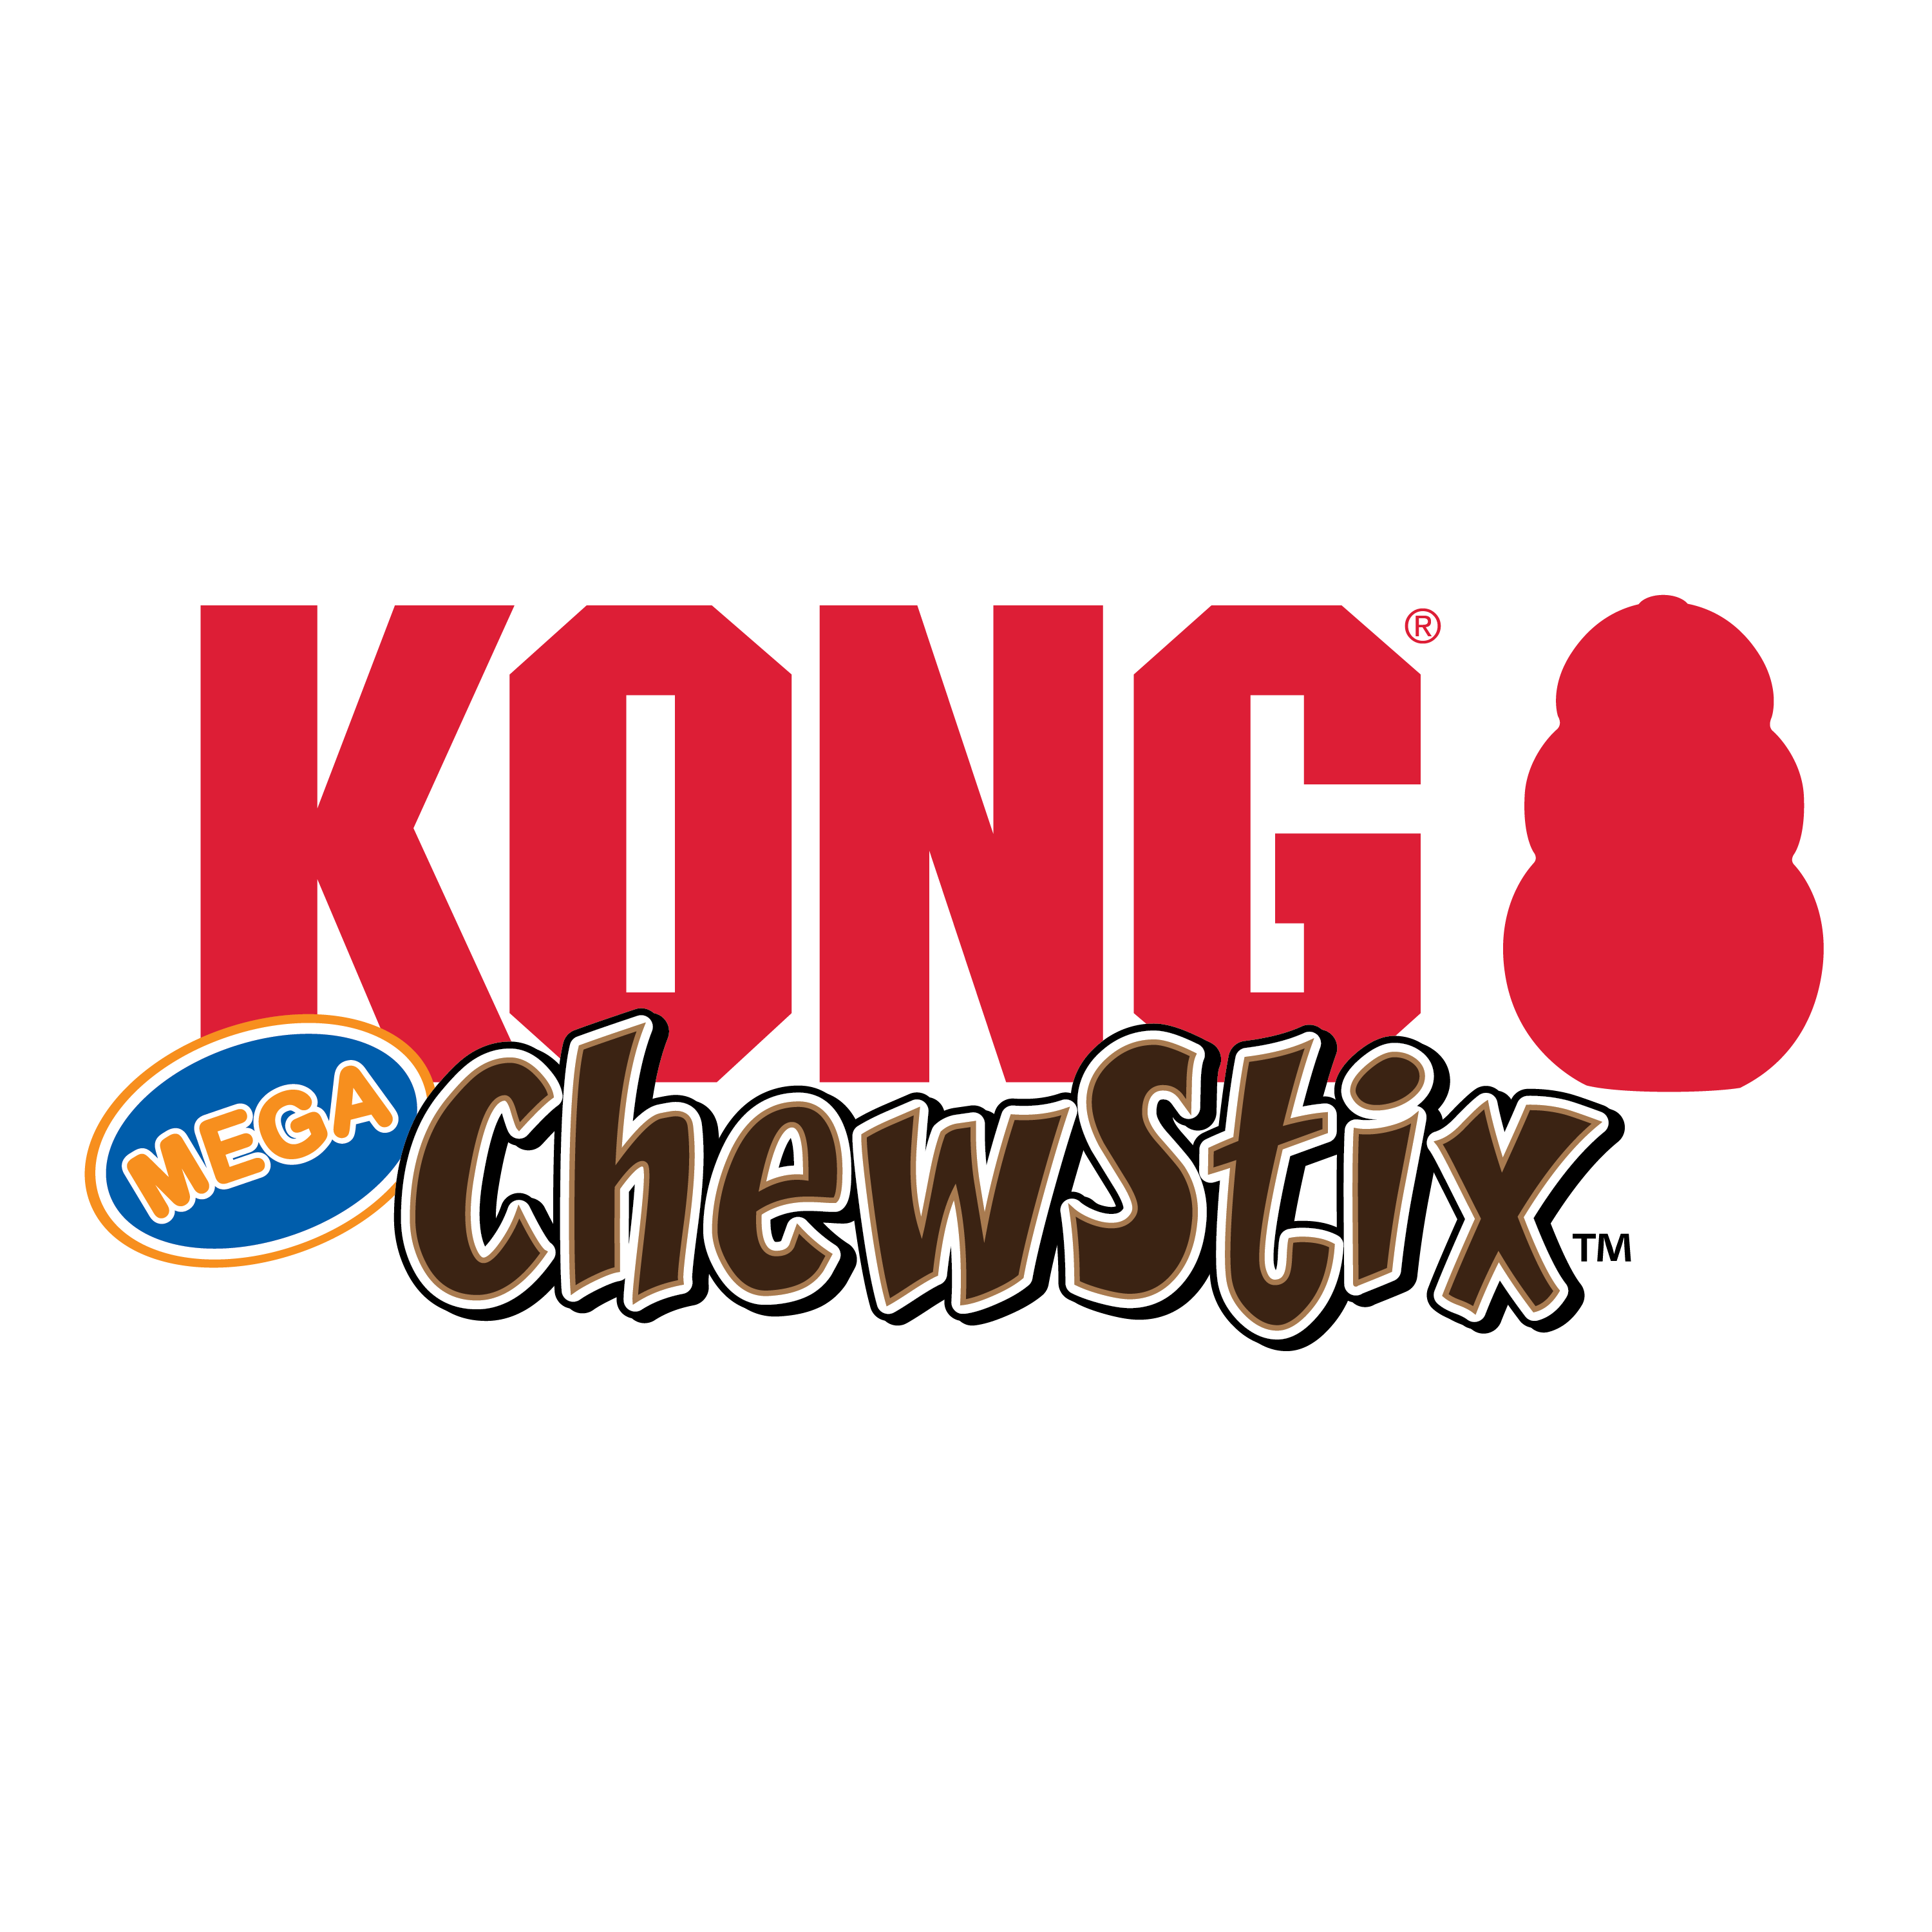 ChewStix Tough Mega Stick alt1 product image